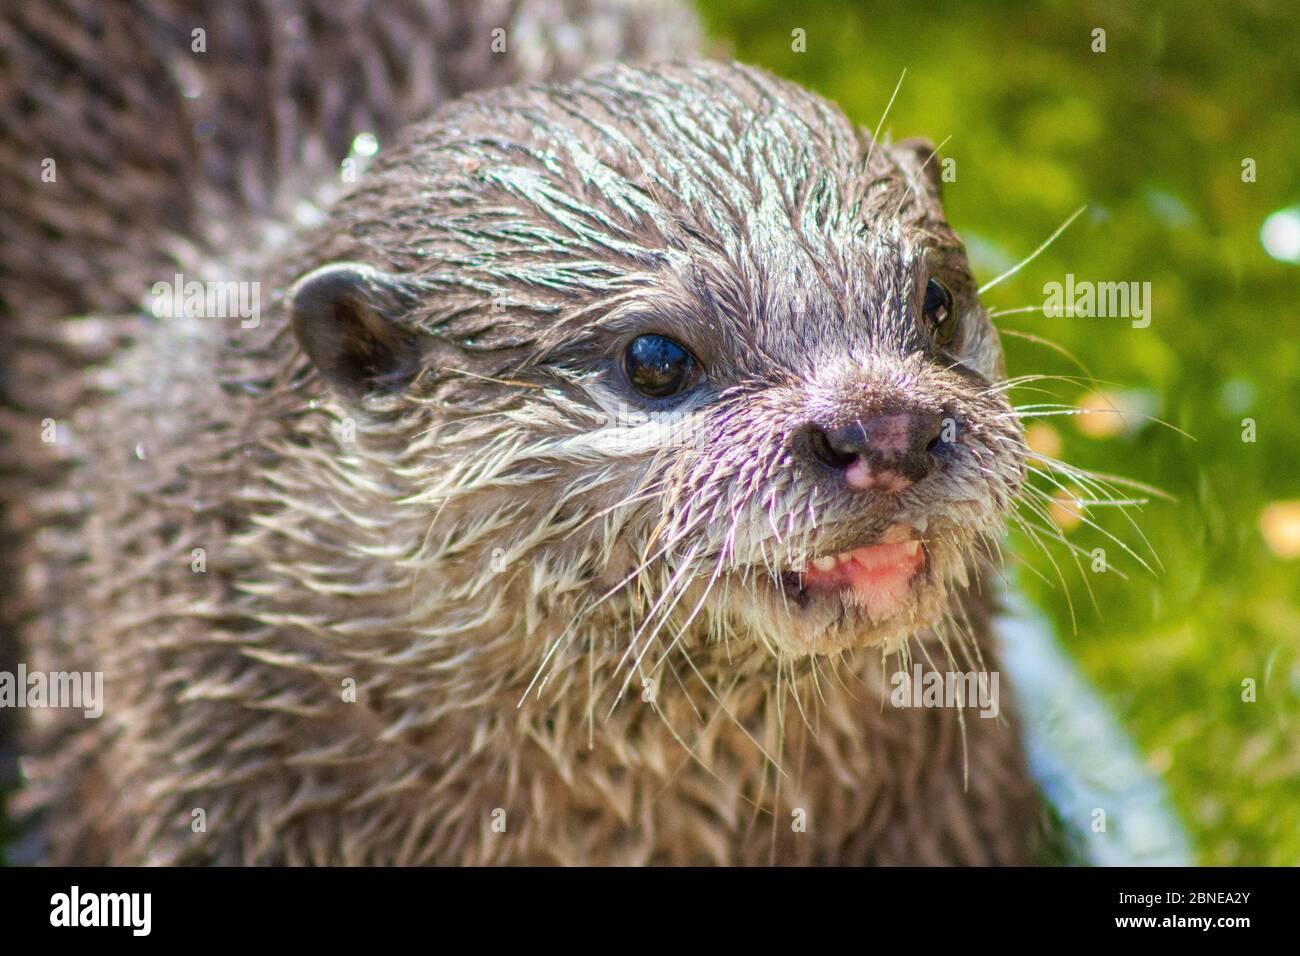 A small otter eats its prey Stock Photo